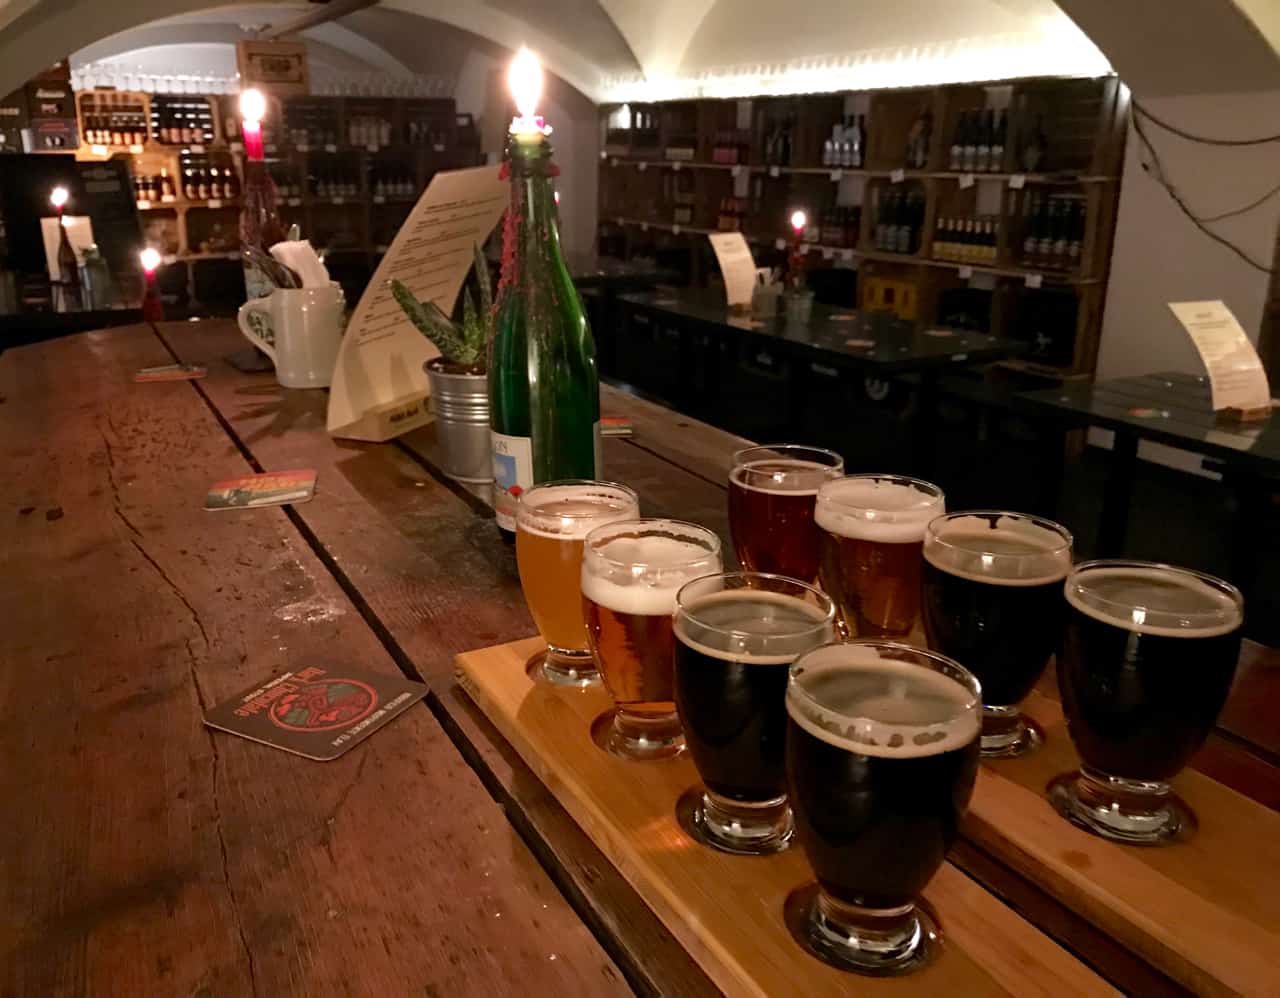 Enjoy a beer paddle at Innsbruck highlight, Tribaun.